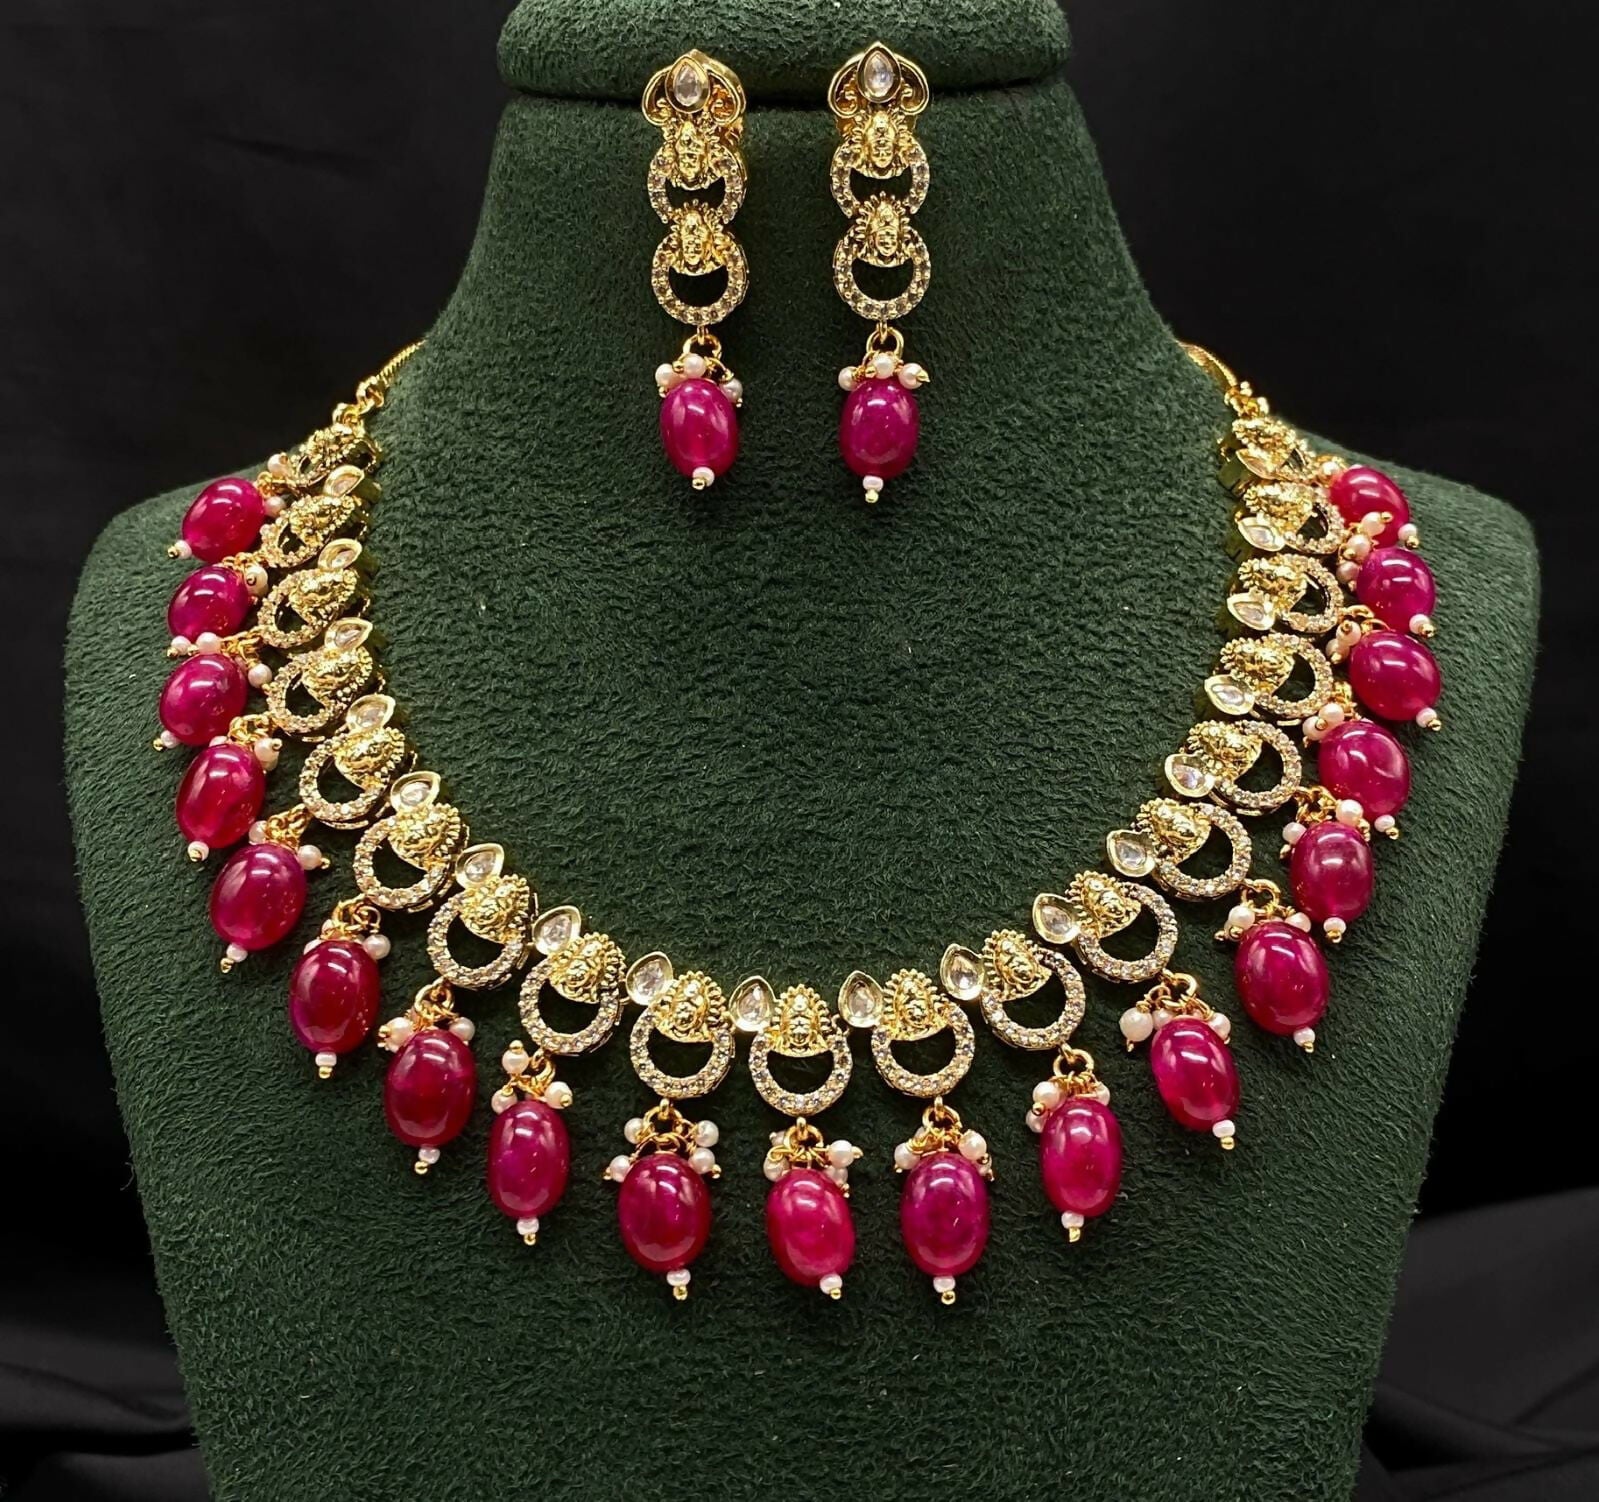 Golden beads necklace set